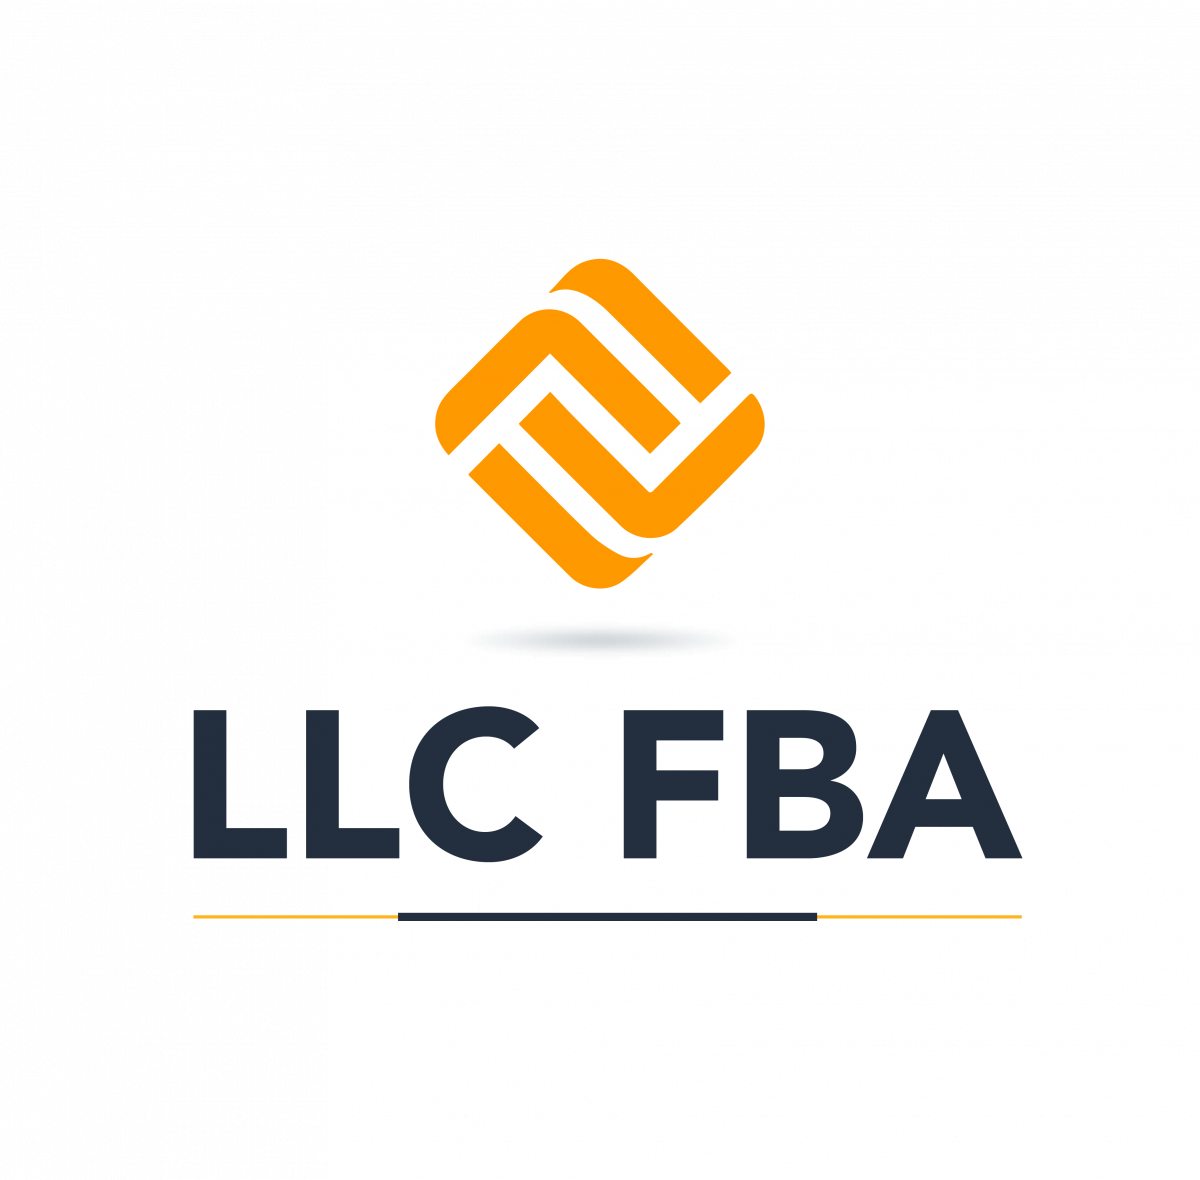 LLC FBA services